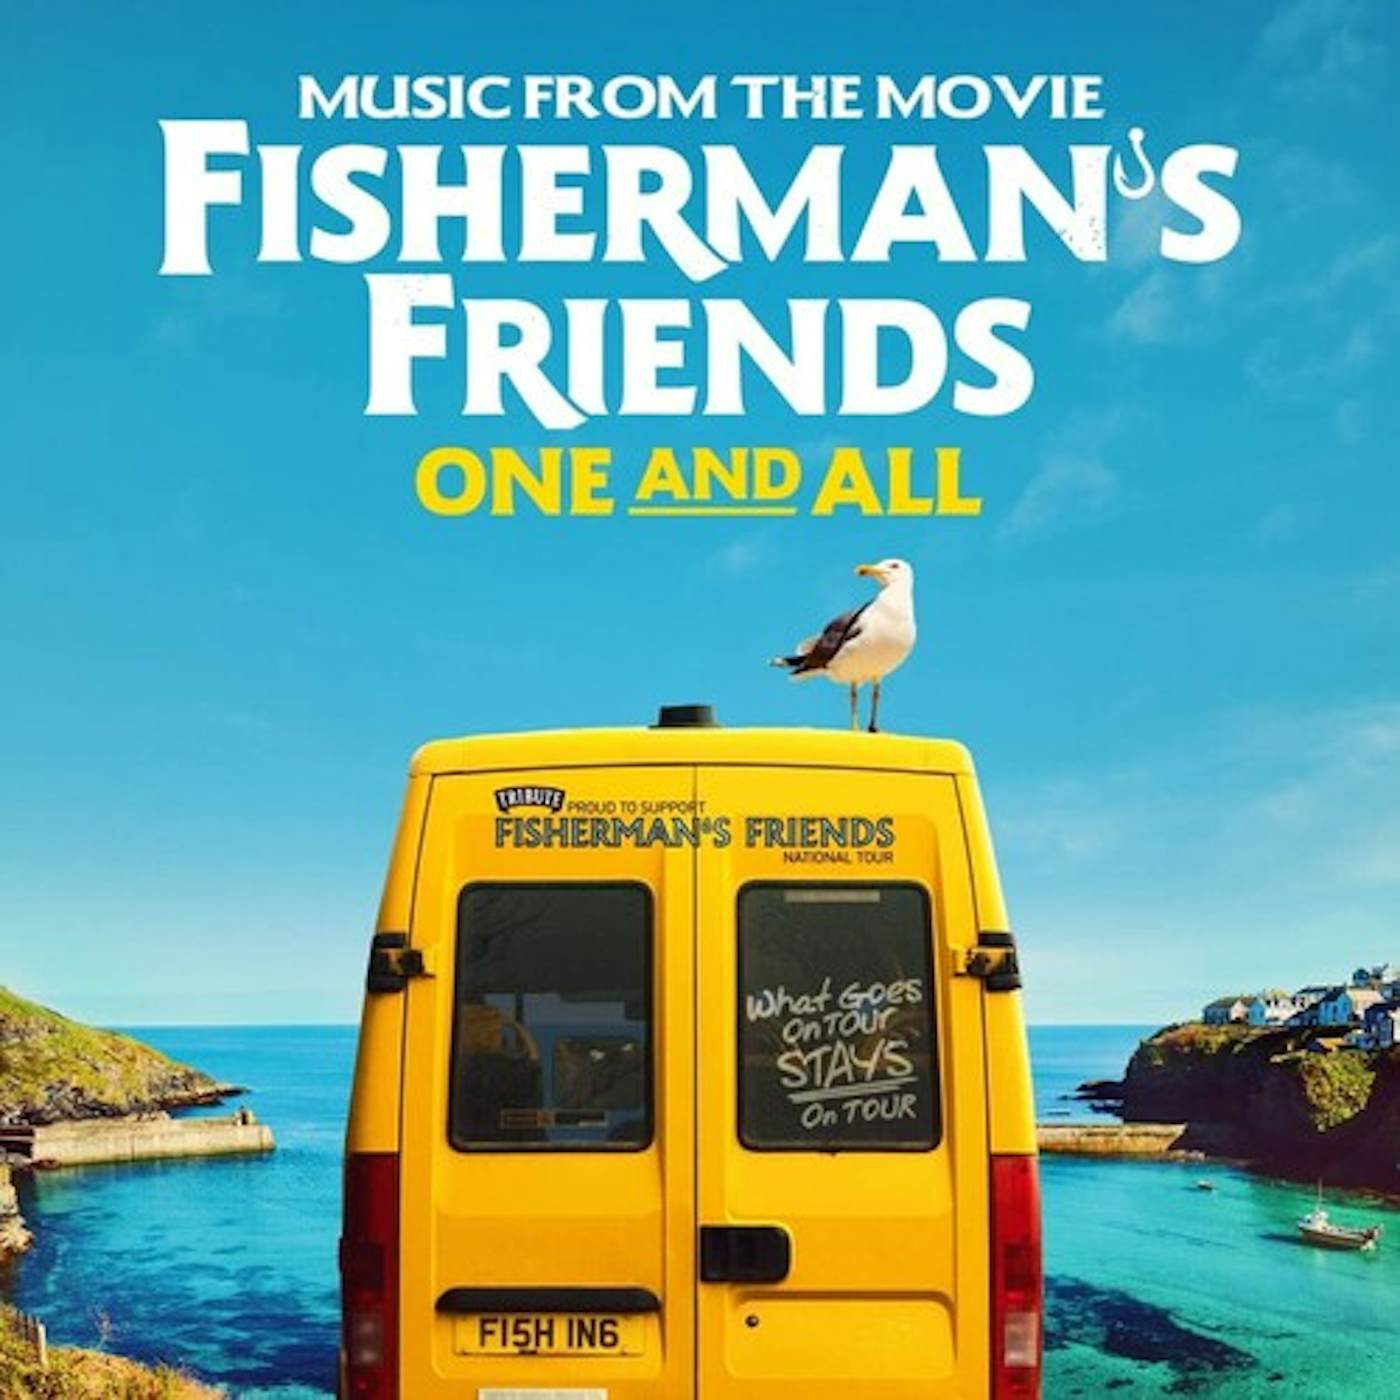  Friends (Original Soundtrack): CDs & Vinyl